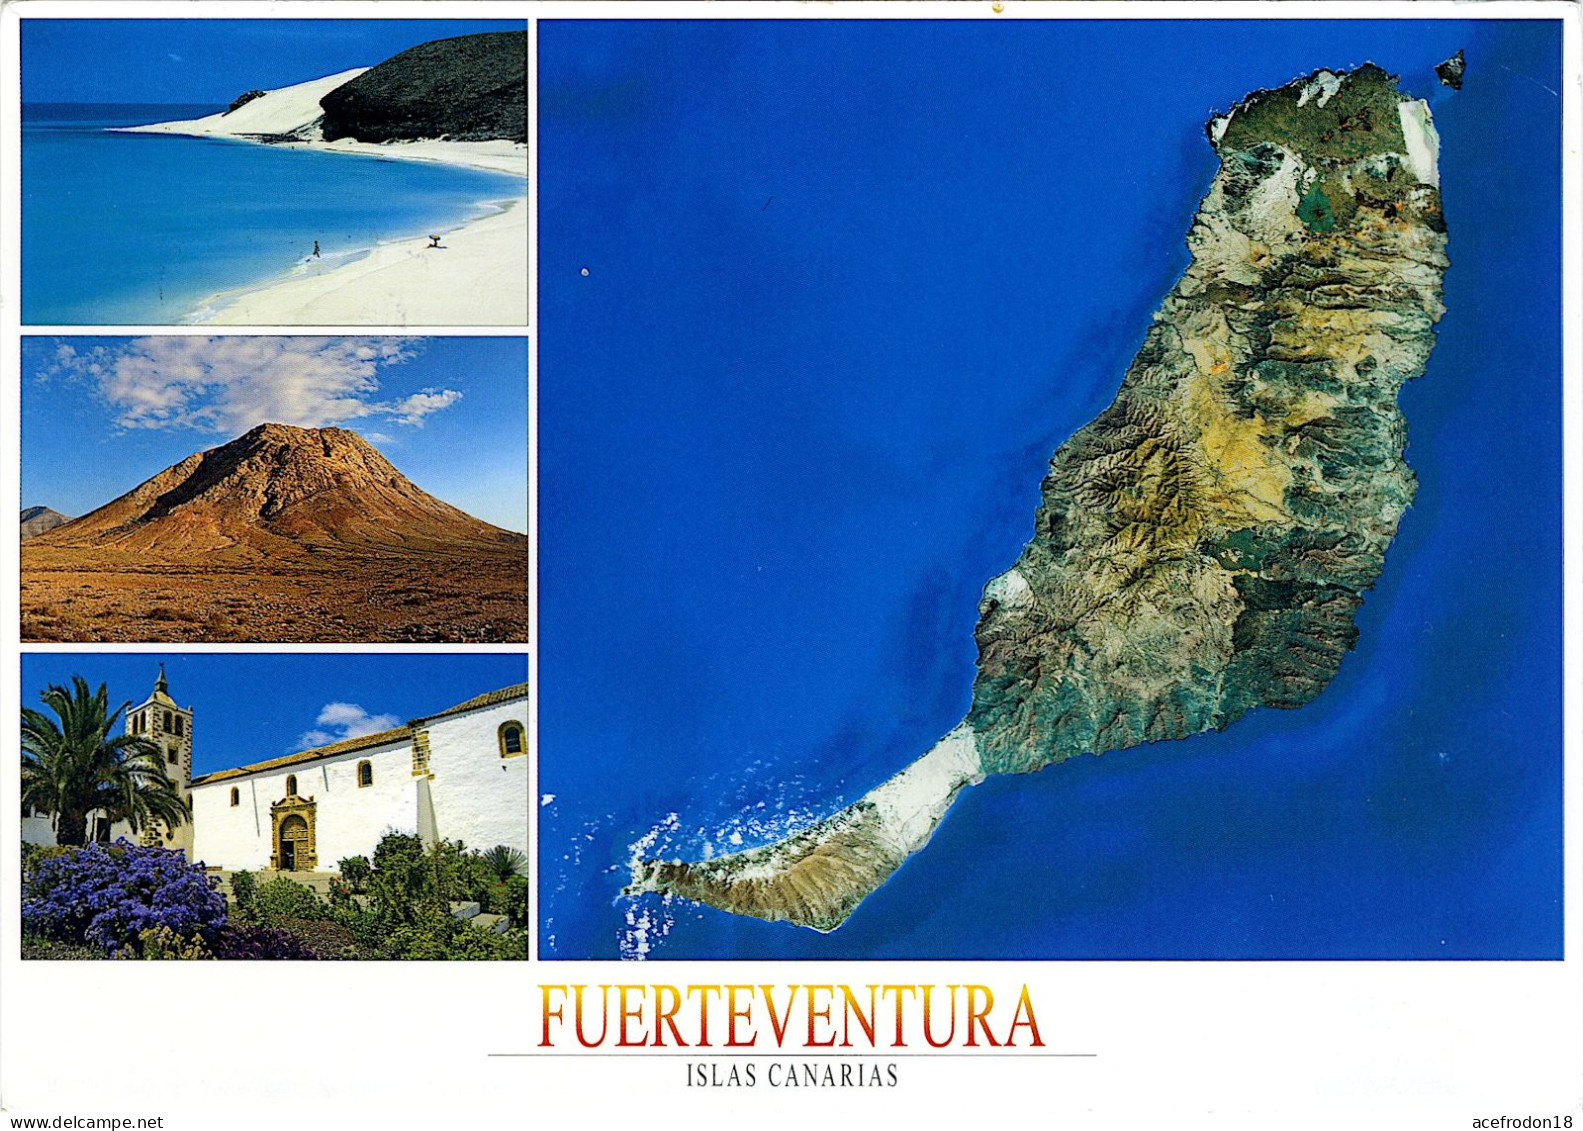 FUERTEVENTURA - ISLAS CANARIAS - Fuerteventura